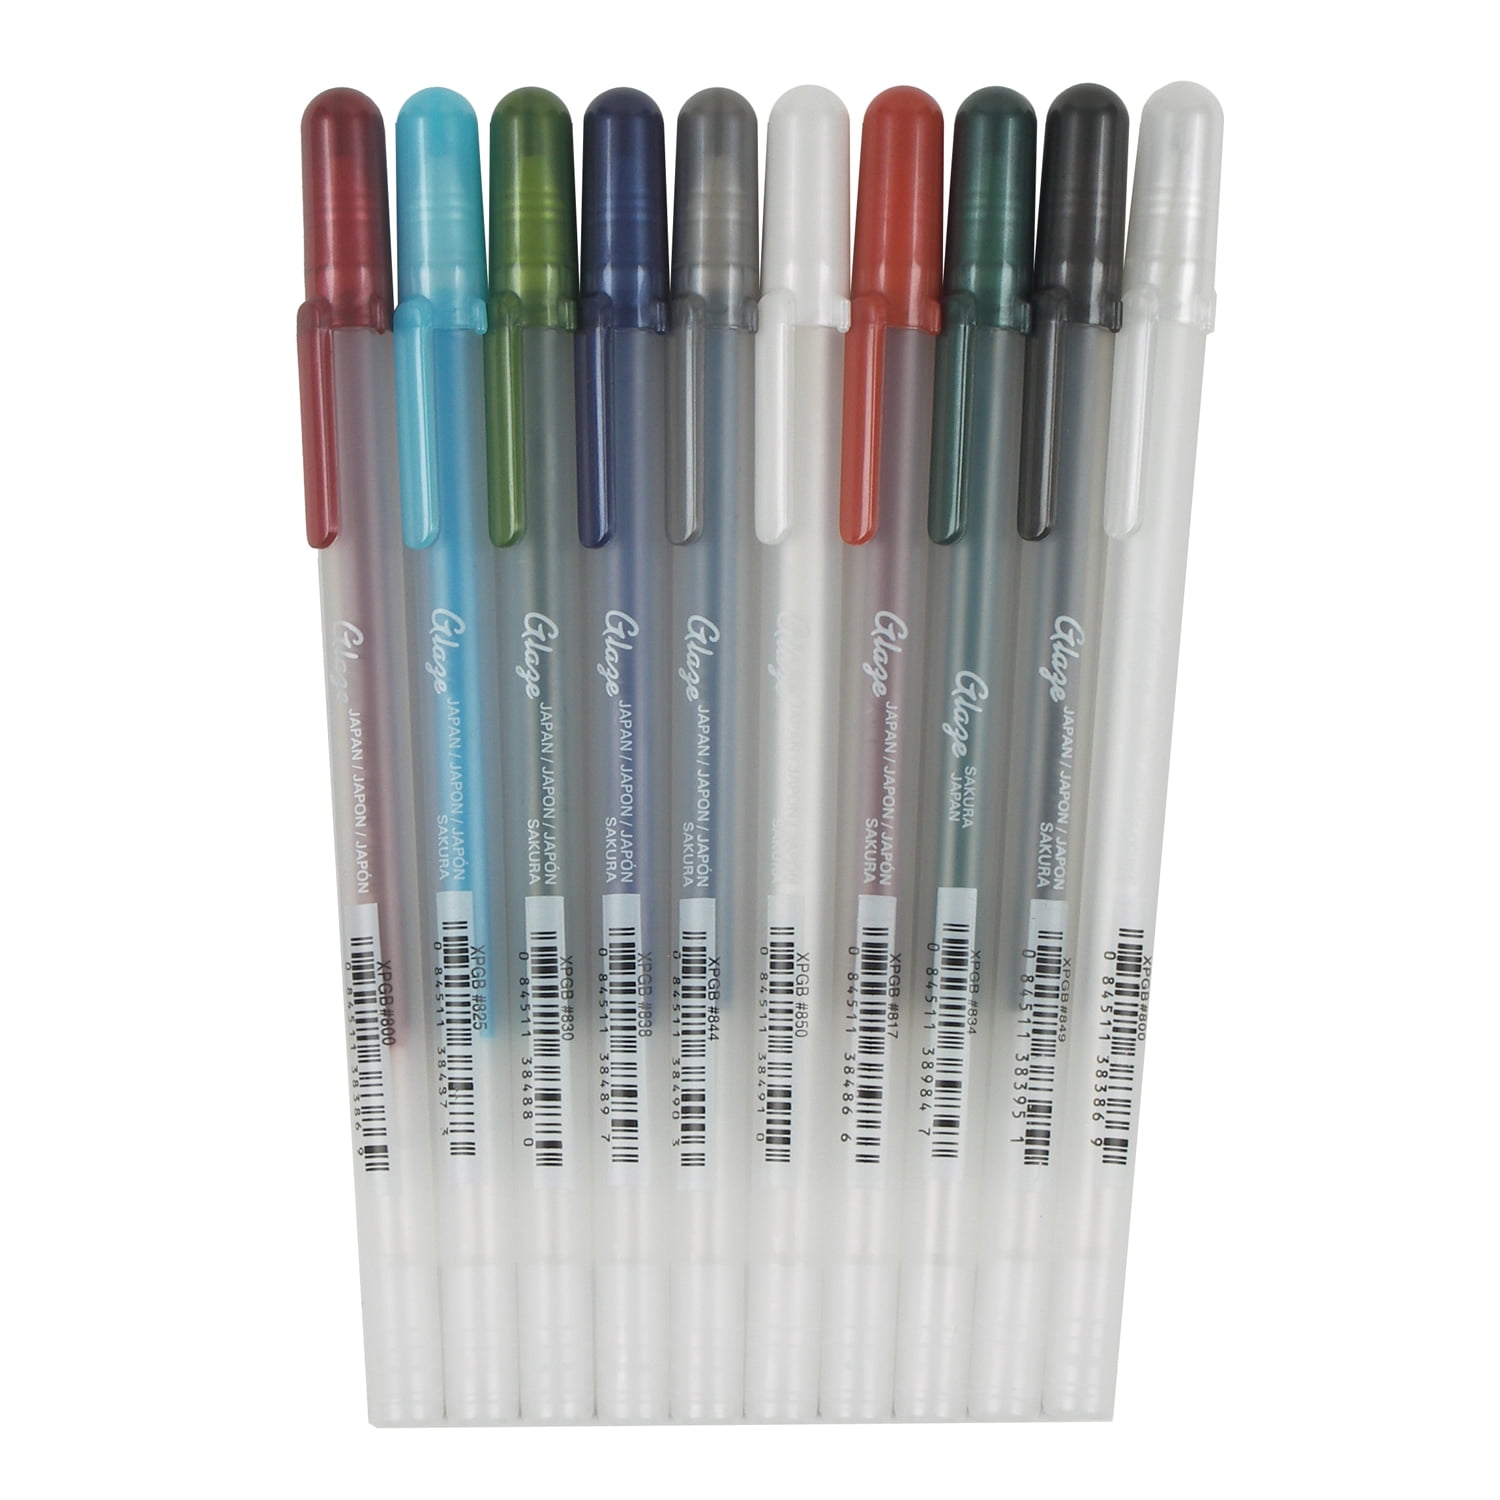 38370 Sakura Gelly Roll Glaze Gel Pen, Glossy Bright Colors, Pack of 10  Pens NEW